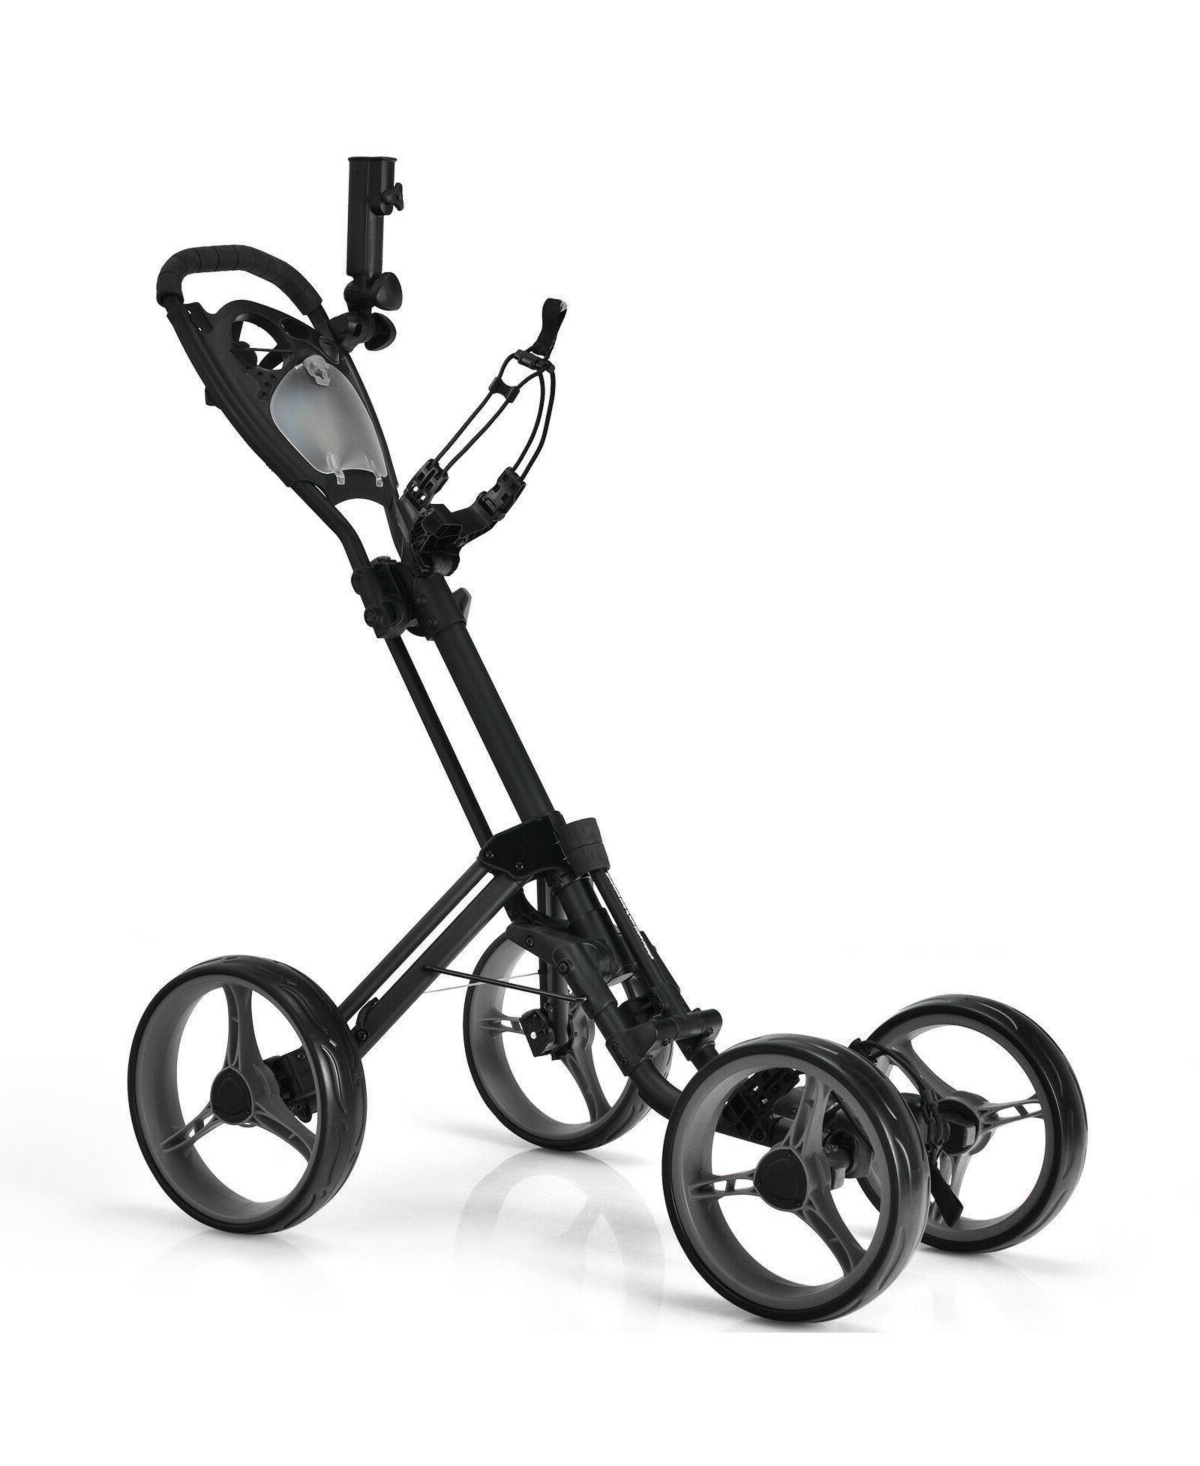 4 Wheel Golf Push Cart with Brake Scoreboard Adjustable Handle - Black